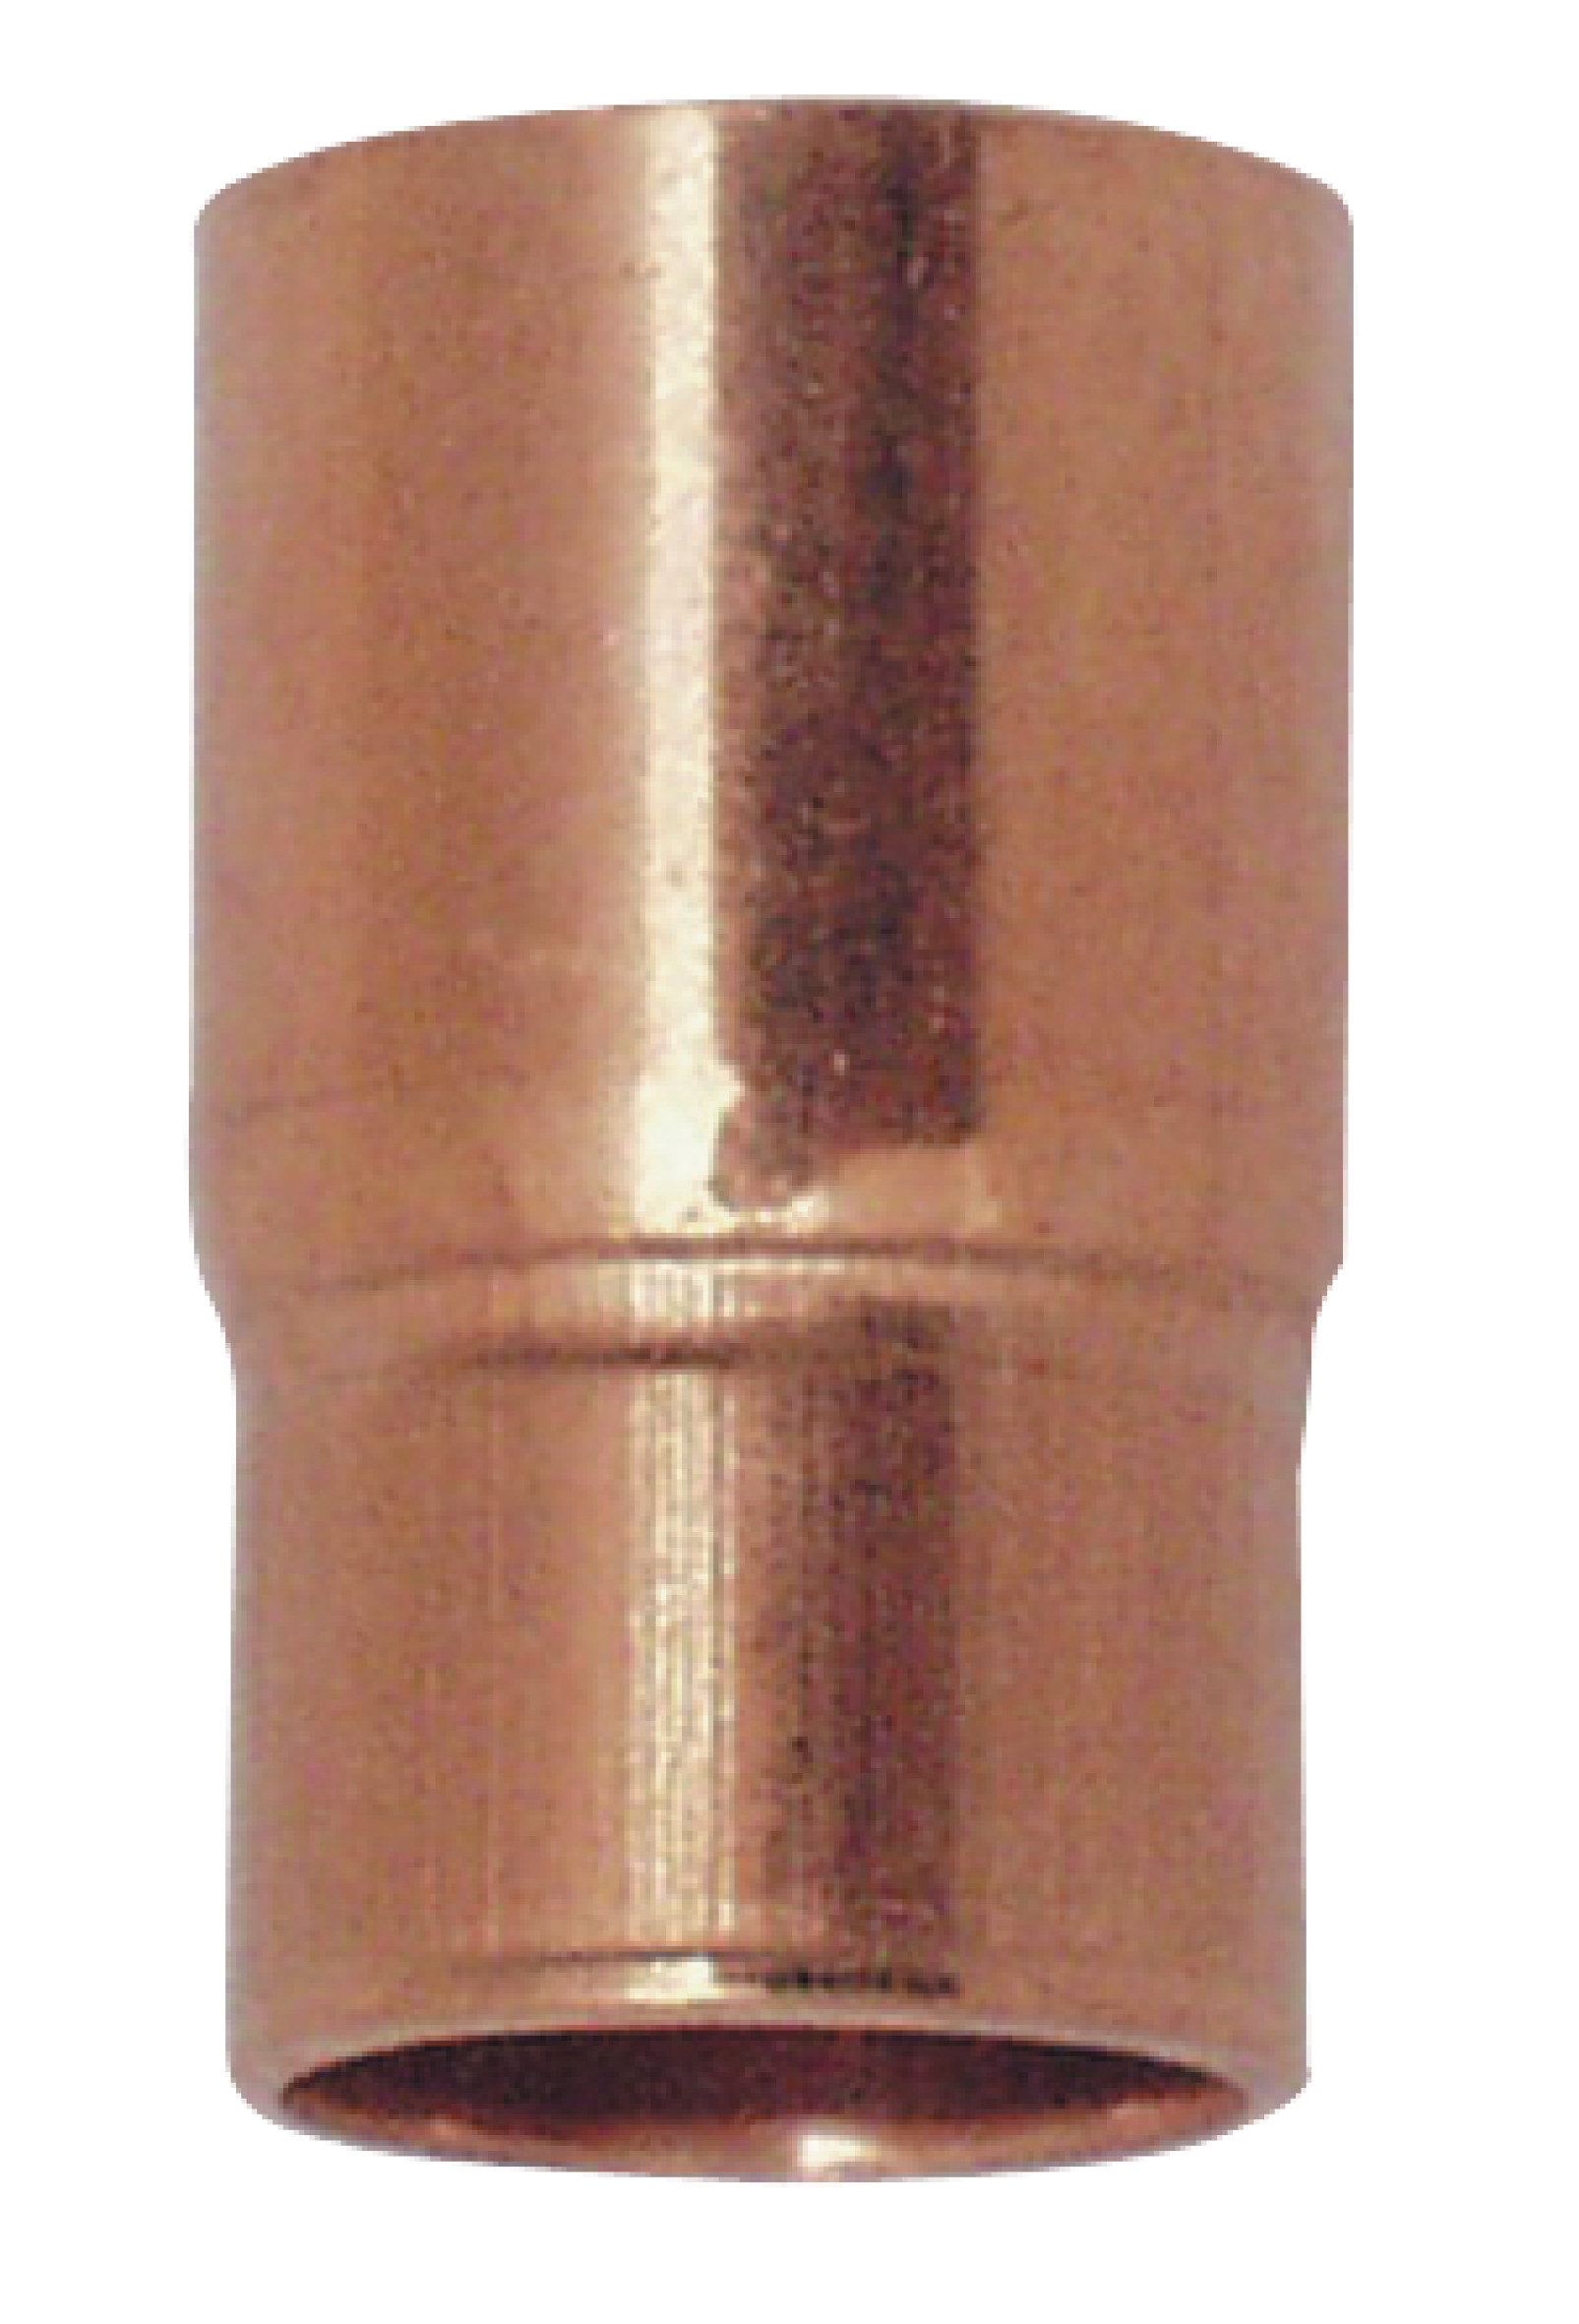 CONMETALL CU Red-Nippel 15ax12mm (1) 